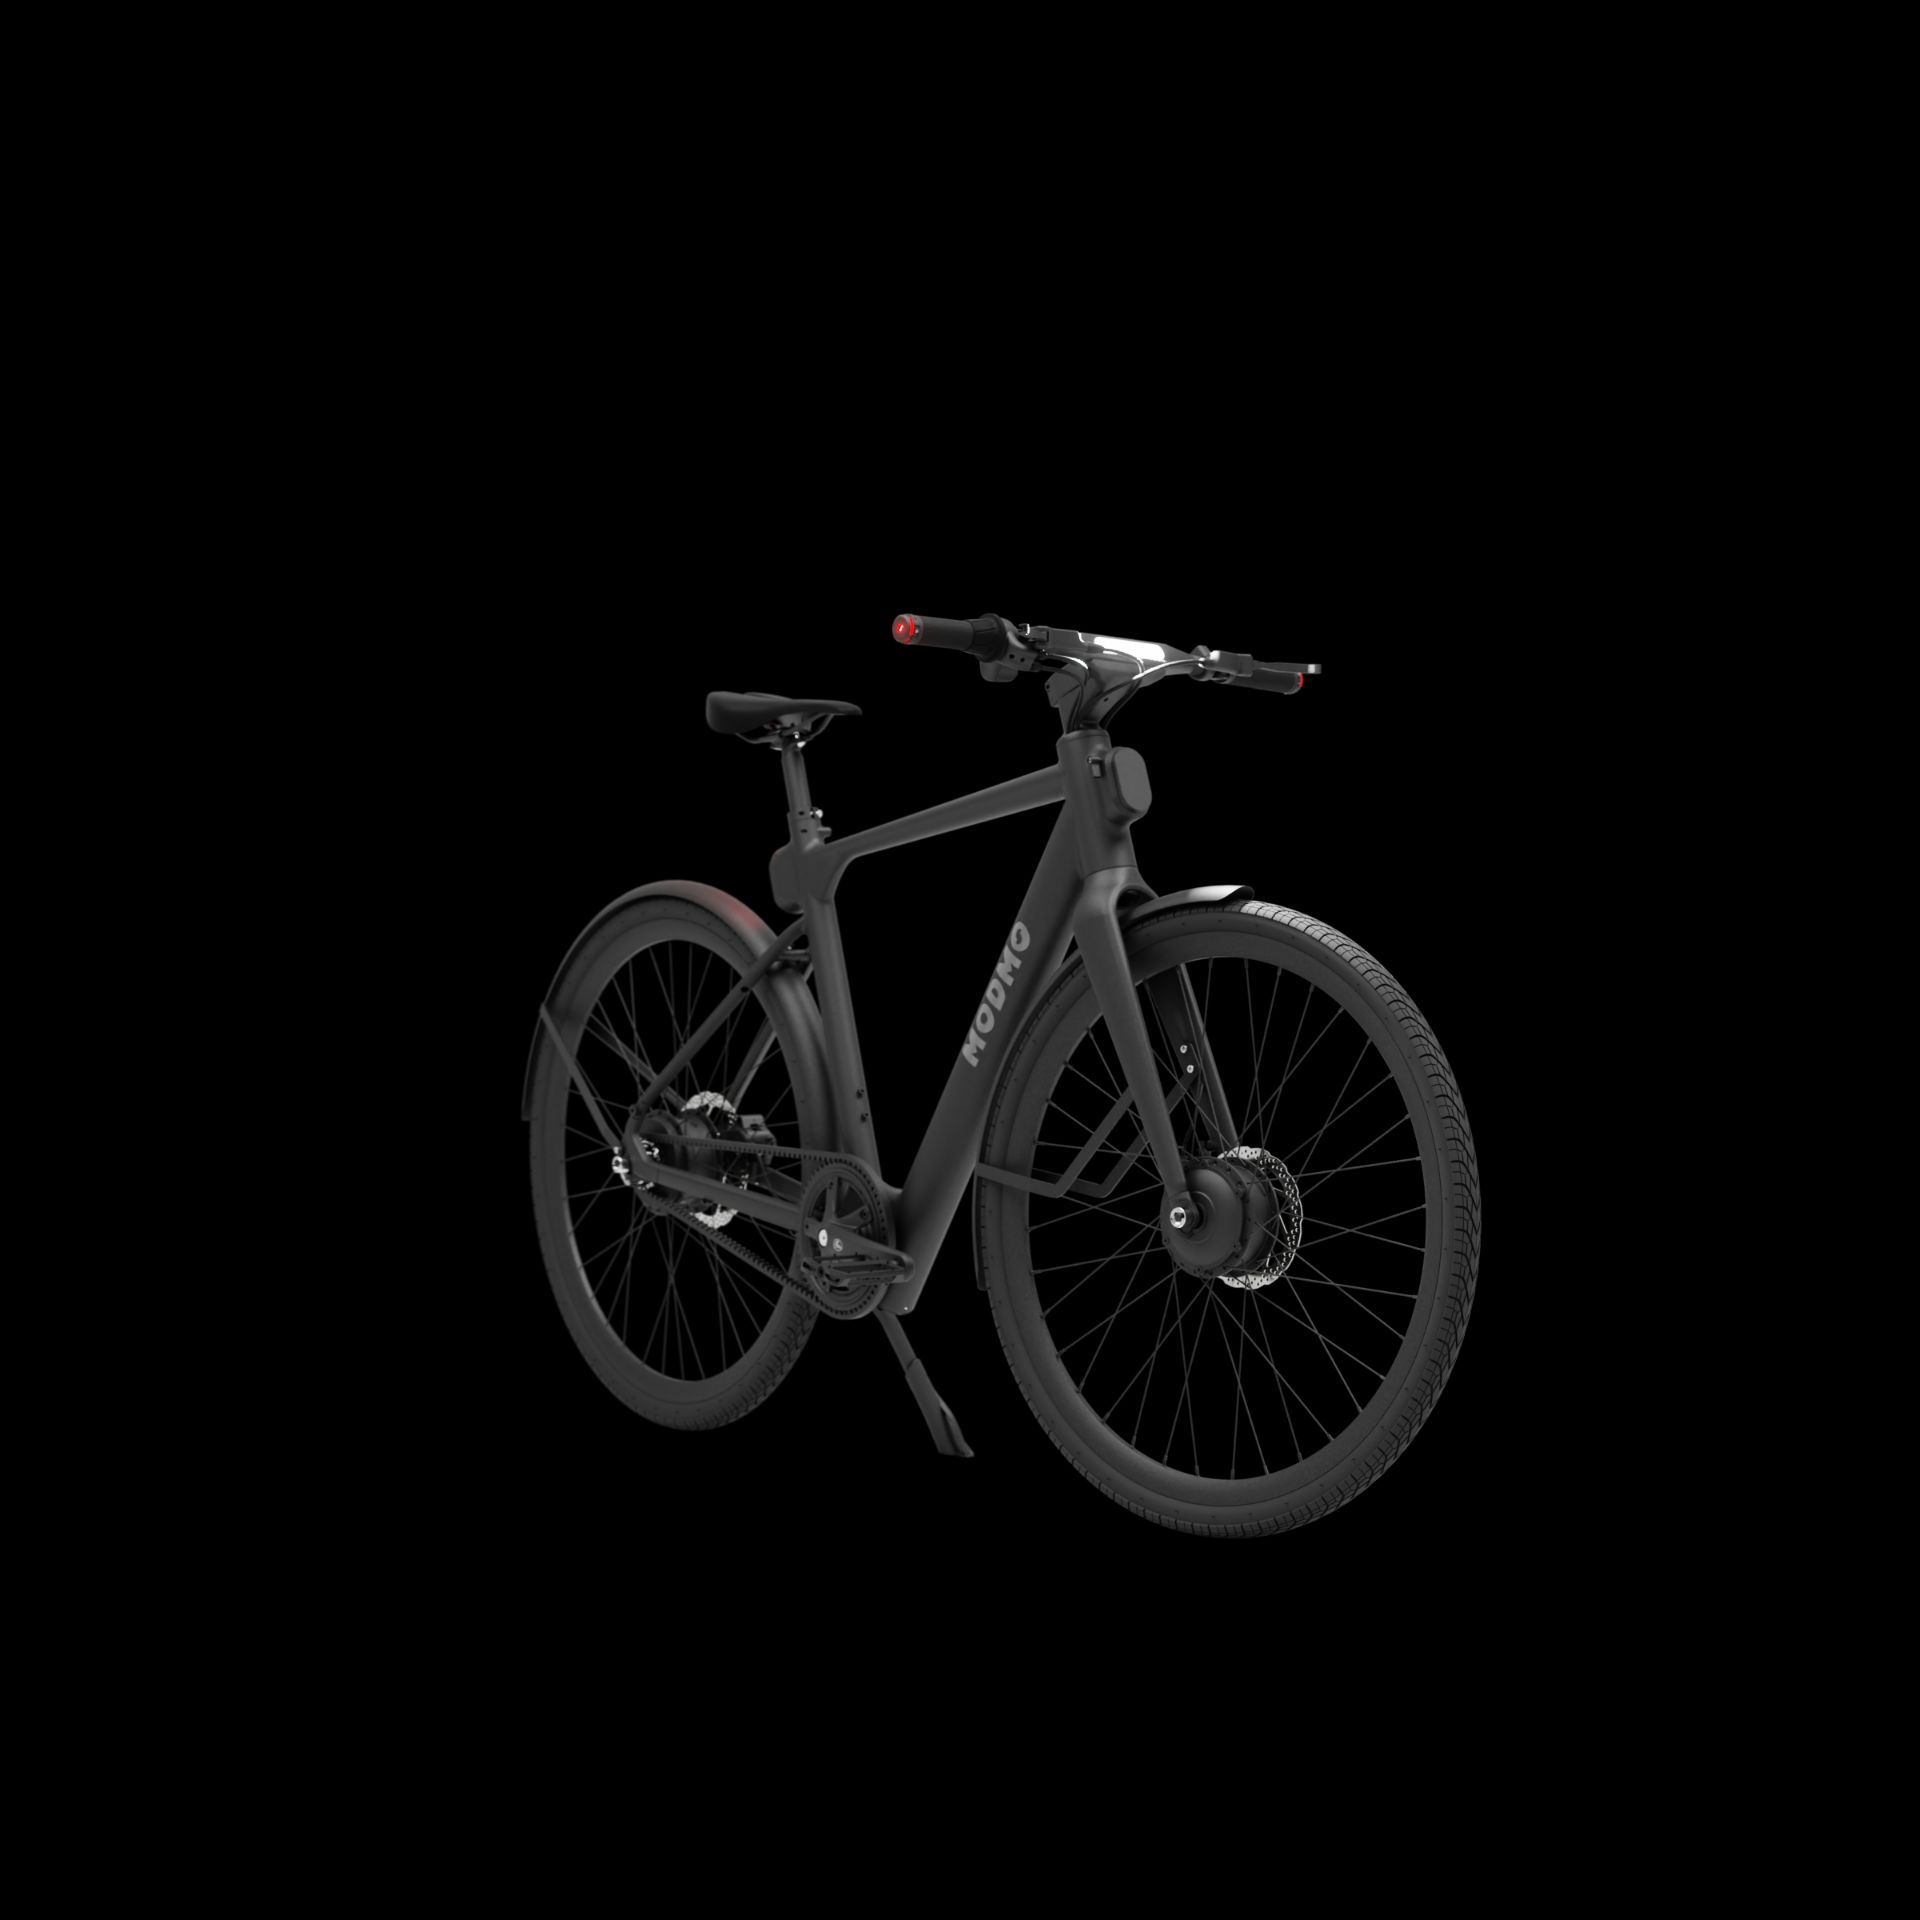 Modmo Saigon+ Electric Bicycle - RRP £2800 - Size L (Rider 175-190cm) - Image 2 of 15